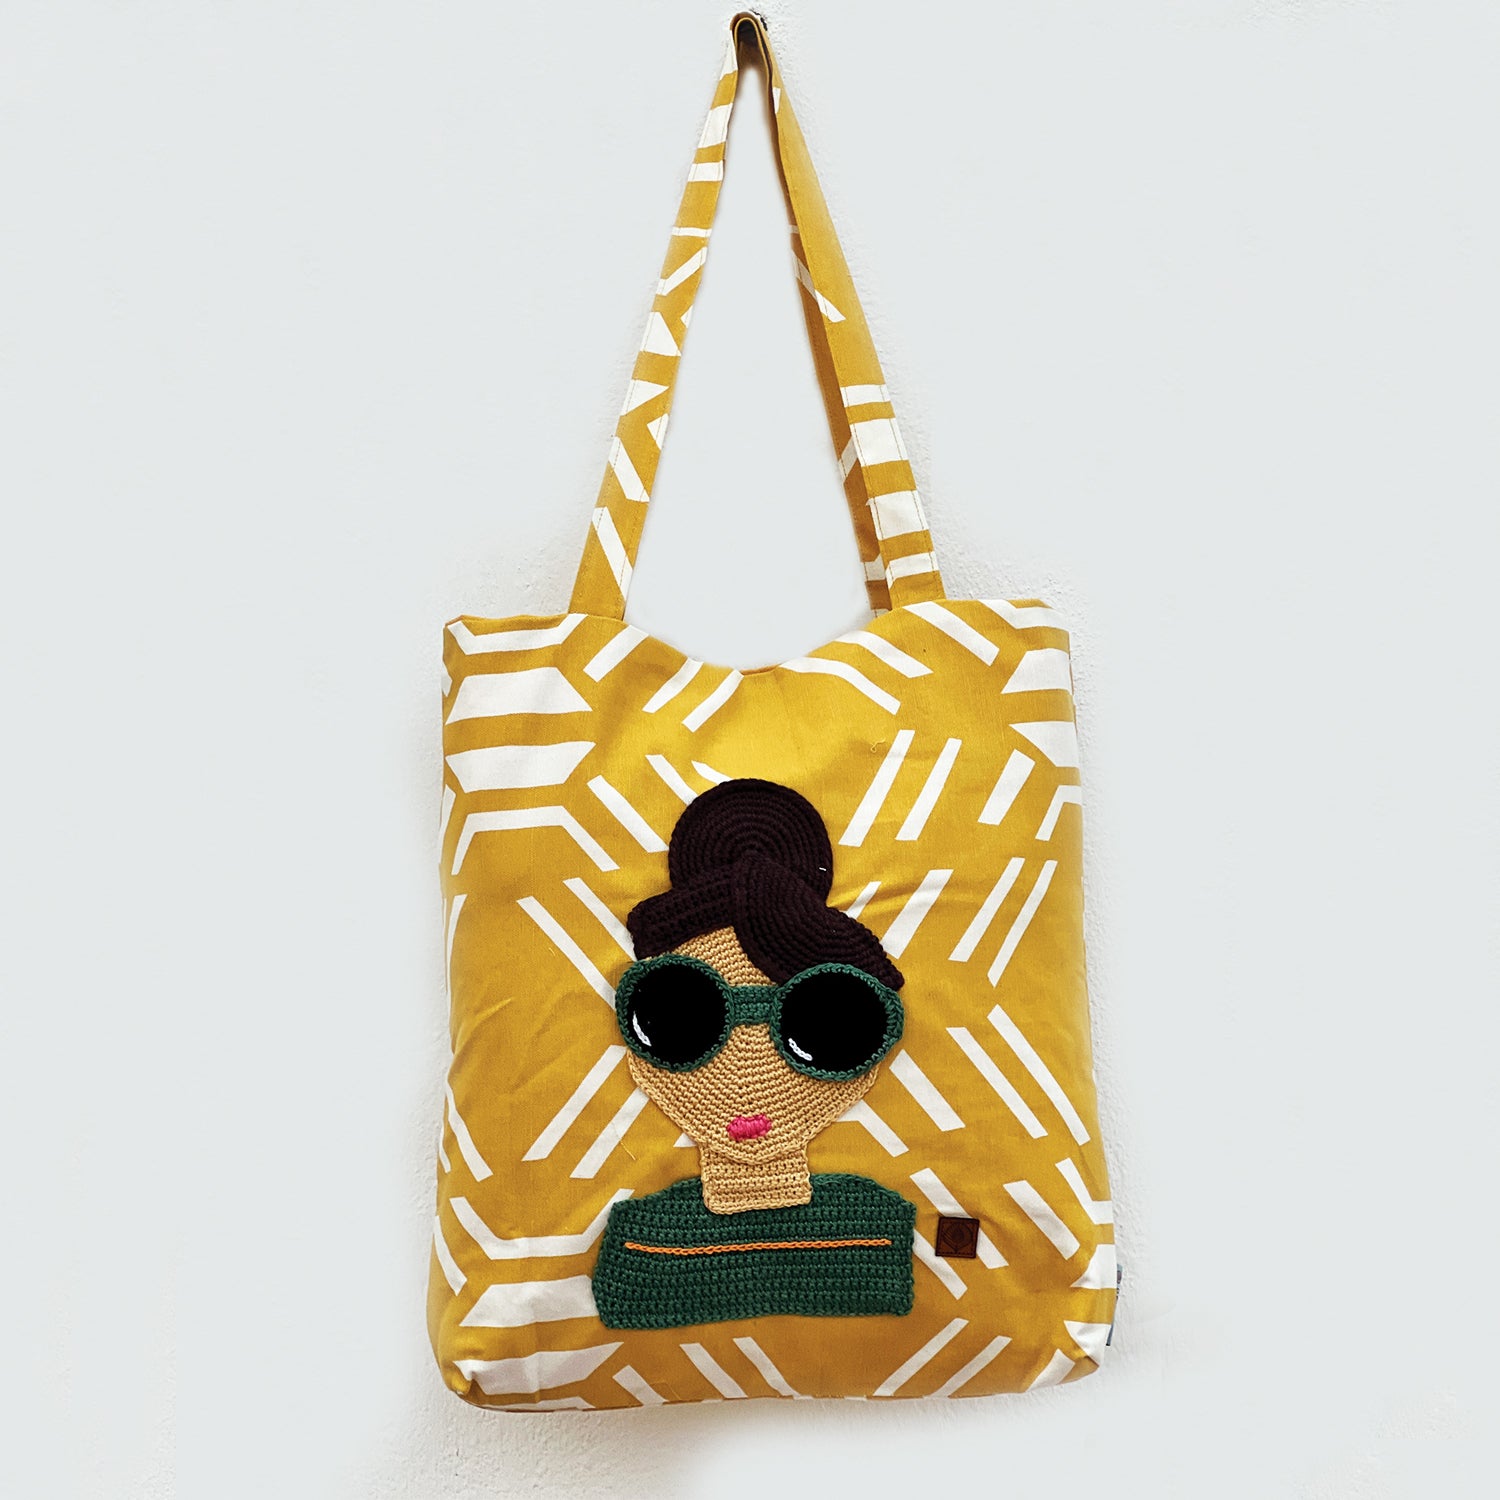 Yellow Crochet Tote Bag